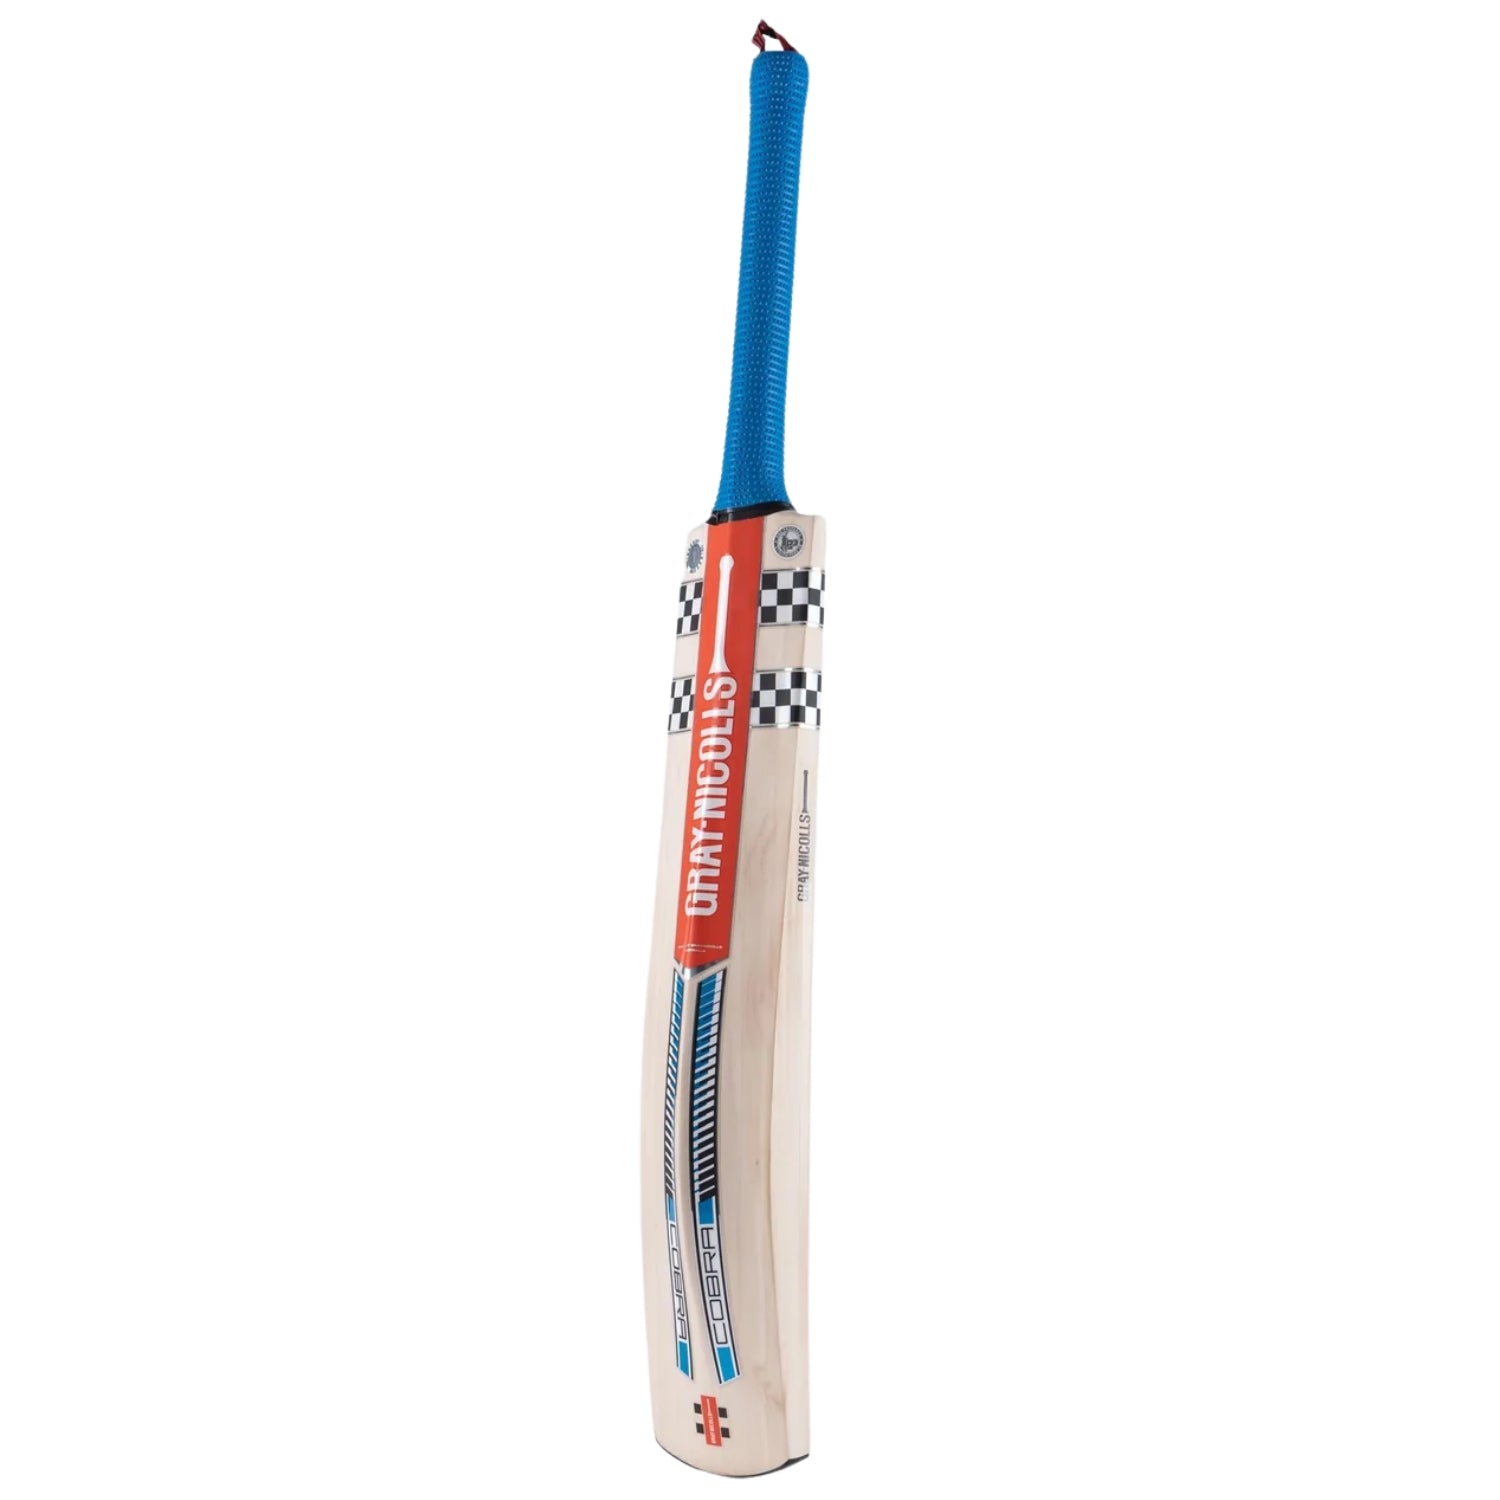 GN | Gray Nicolls Cobra Blue 5-Star PP Cricket Bat | SH